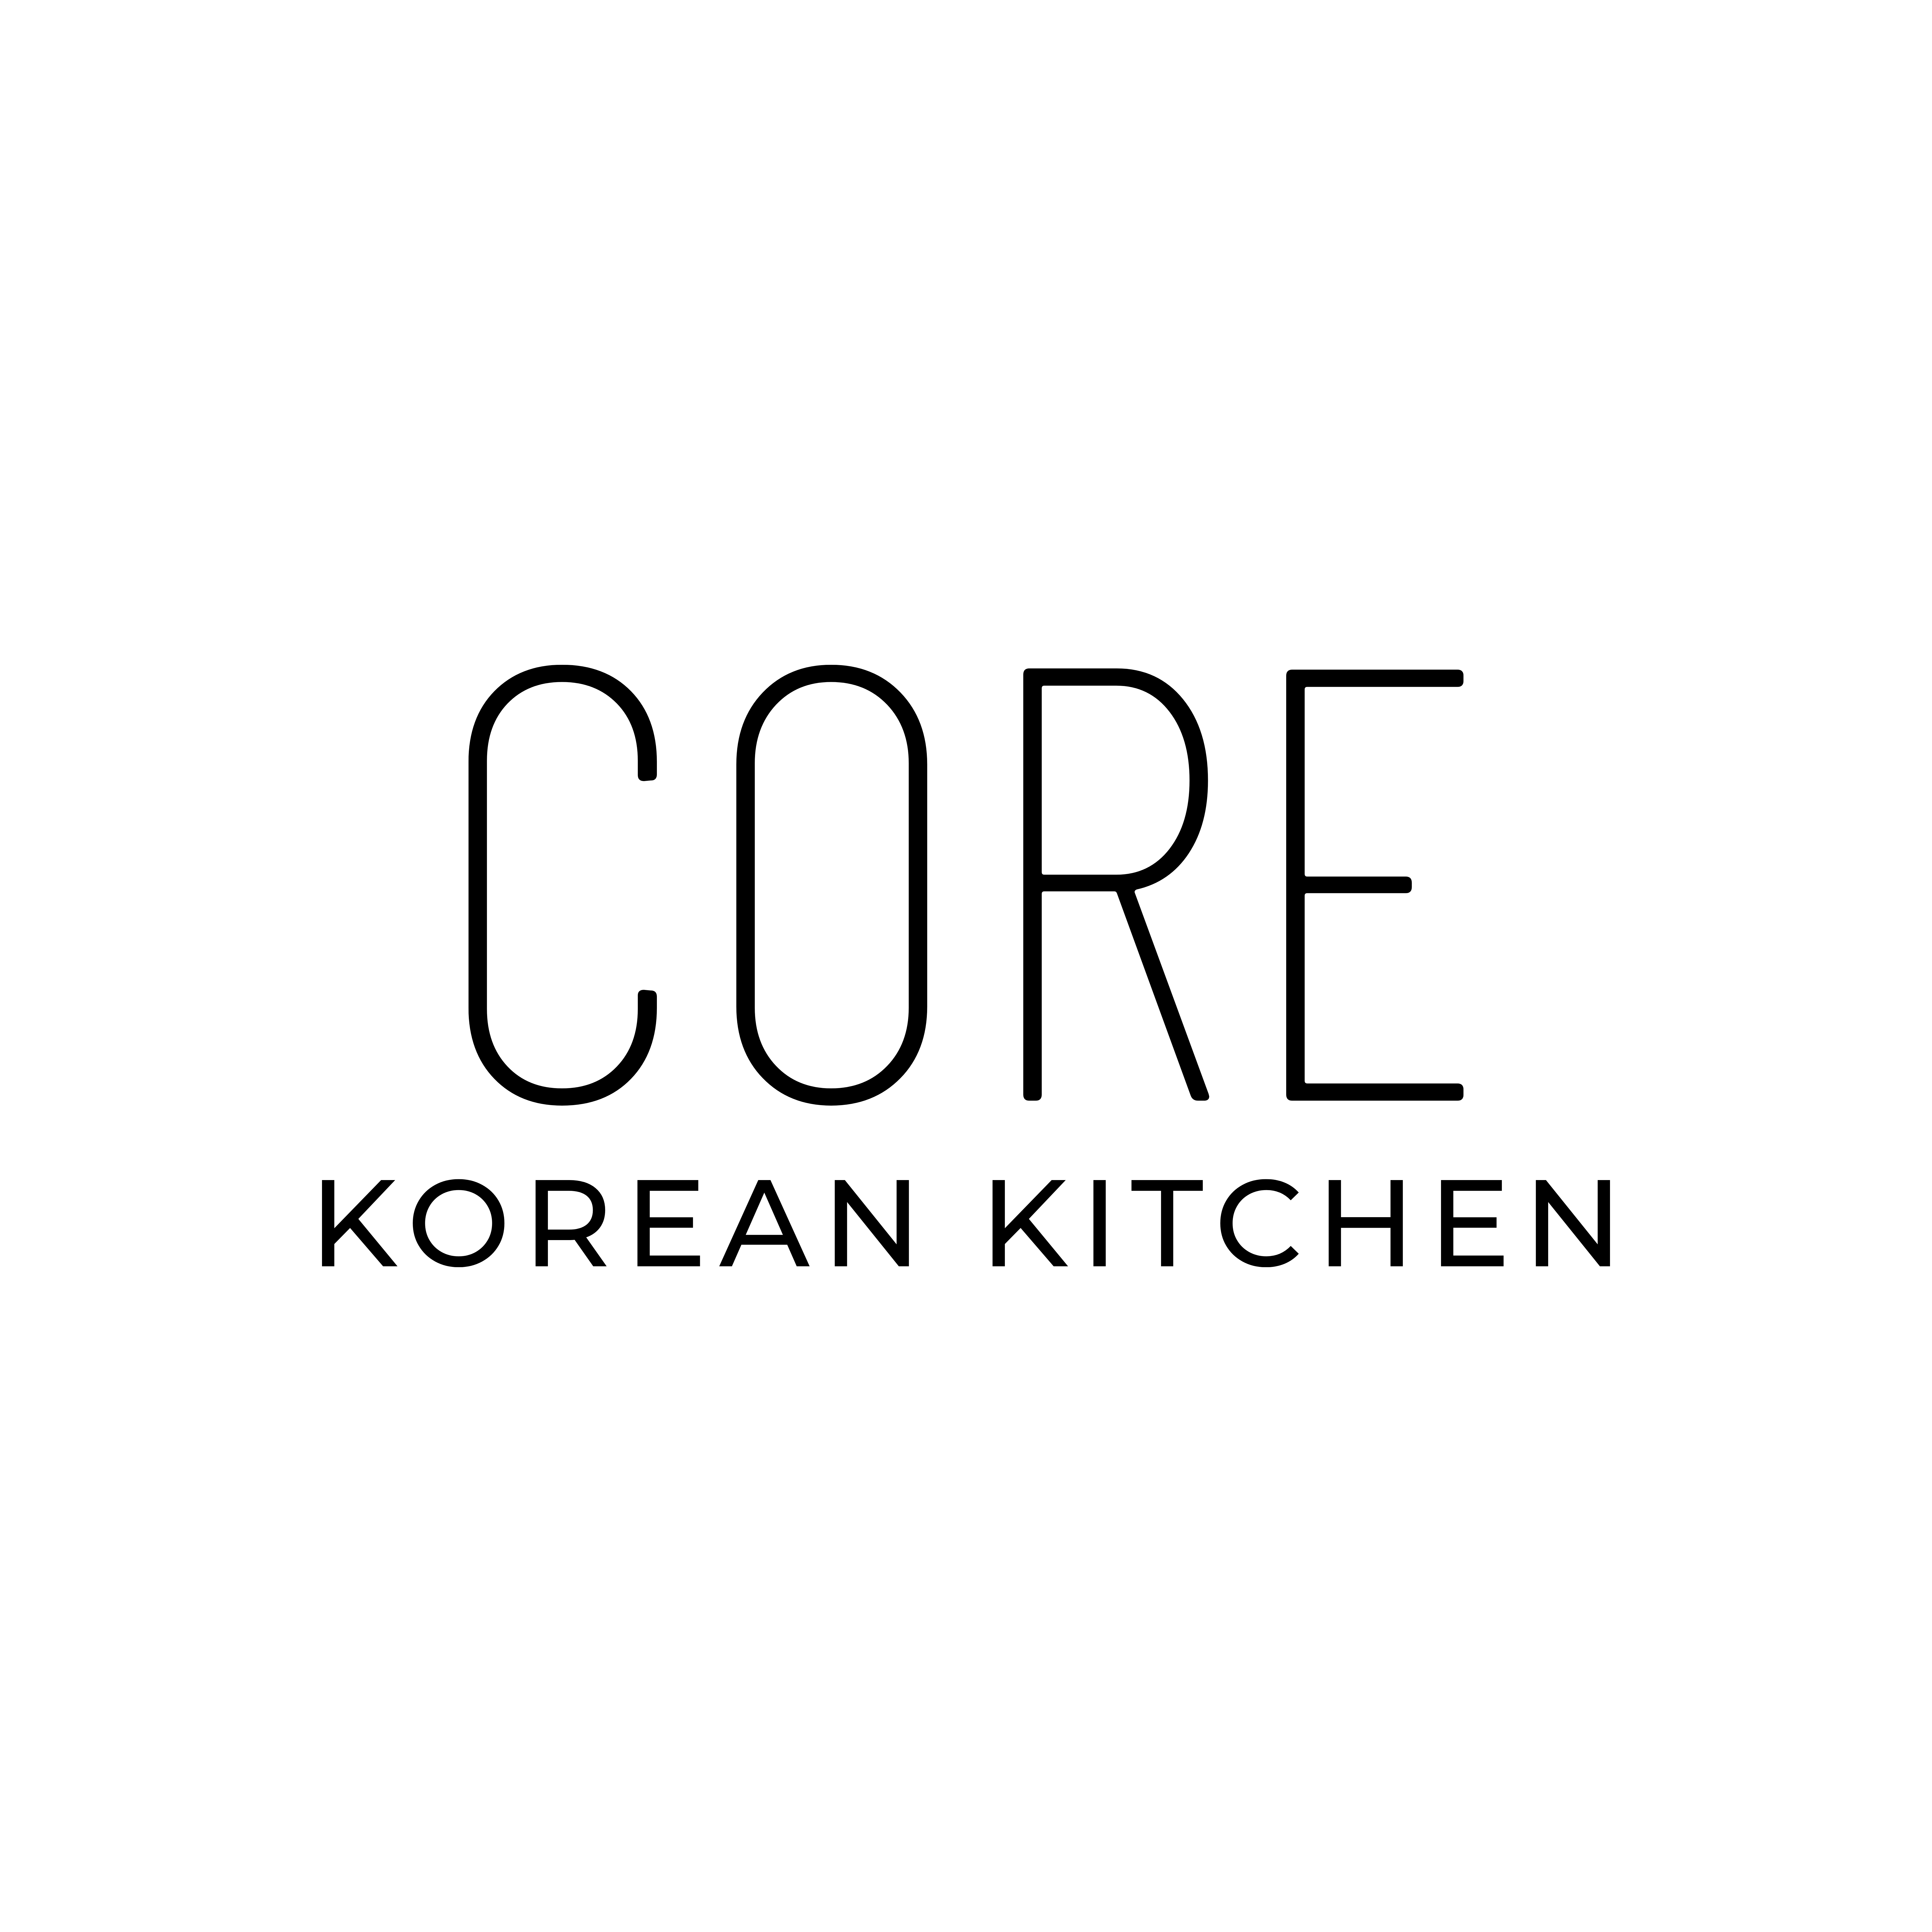 Core Restaurant - Korean Kitchen